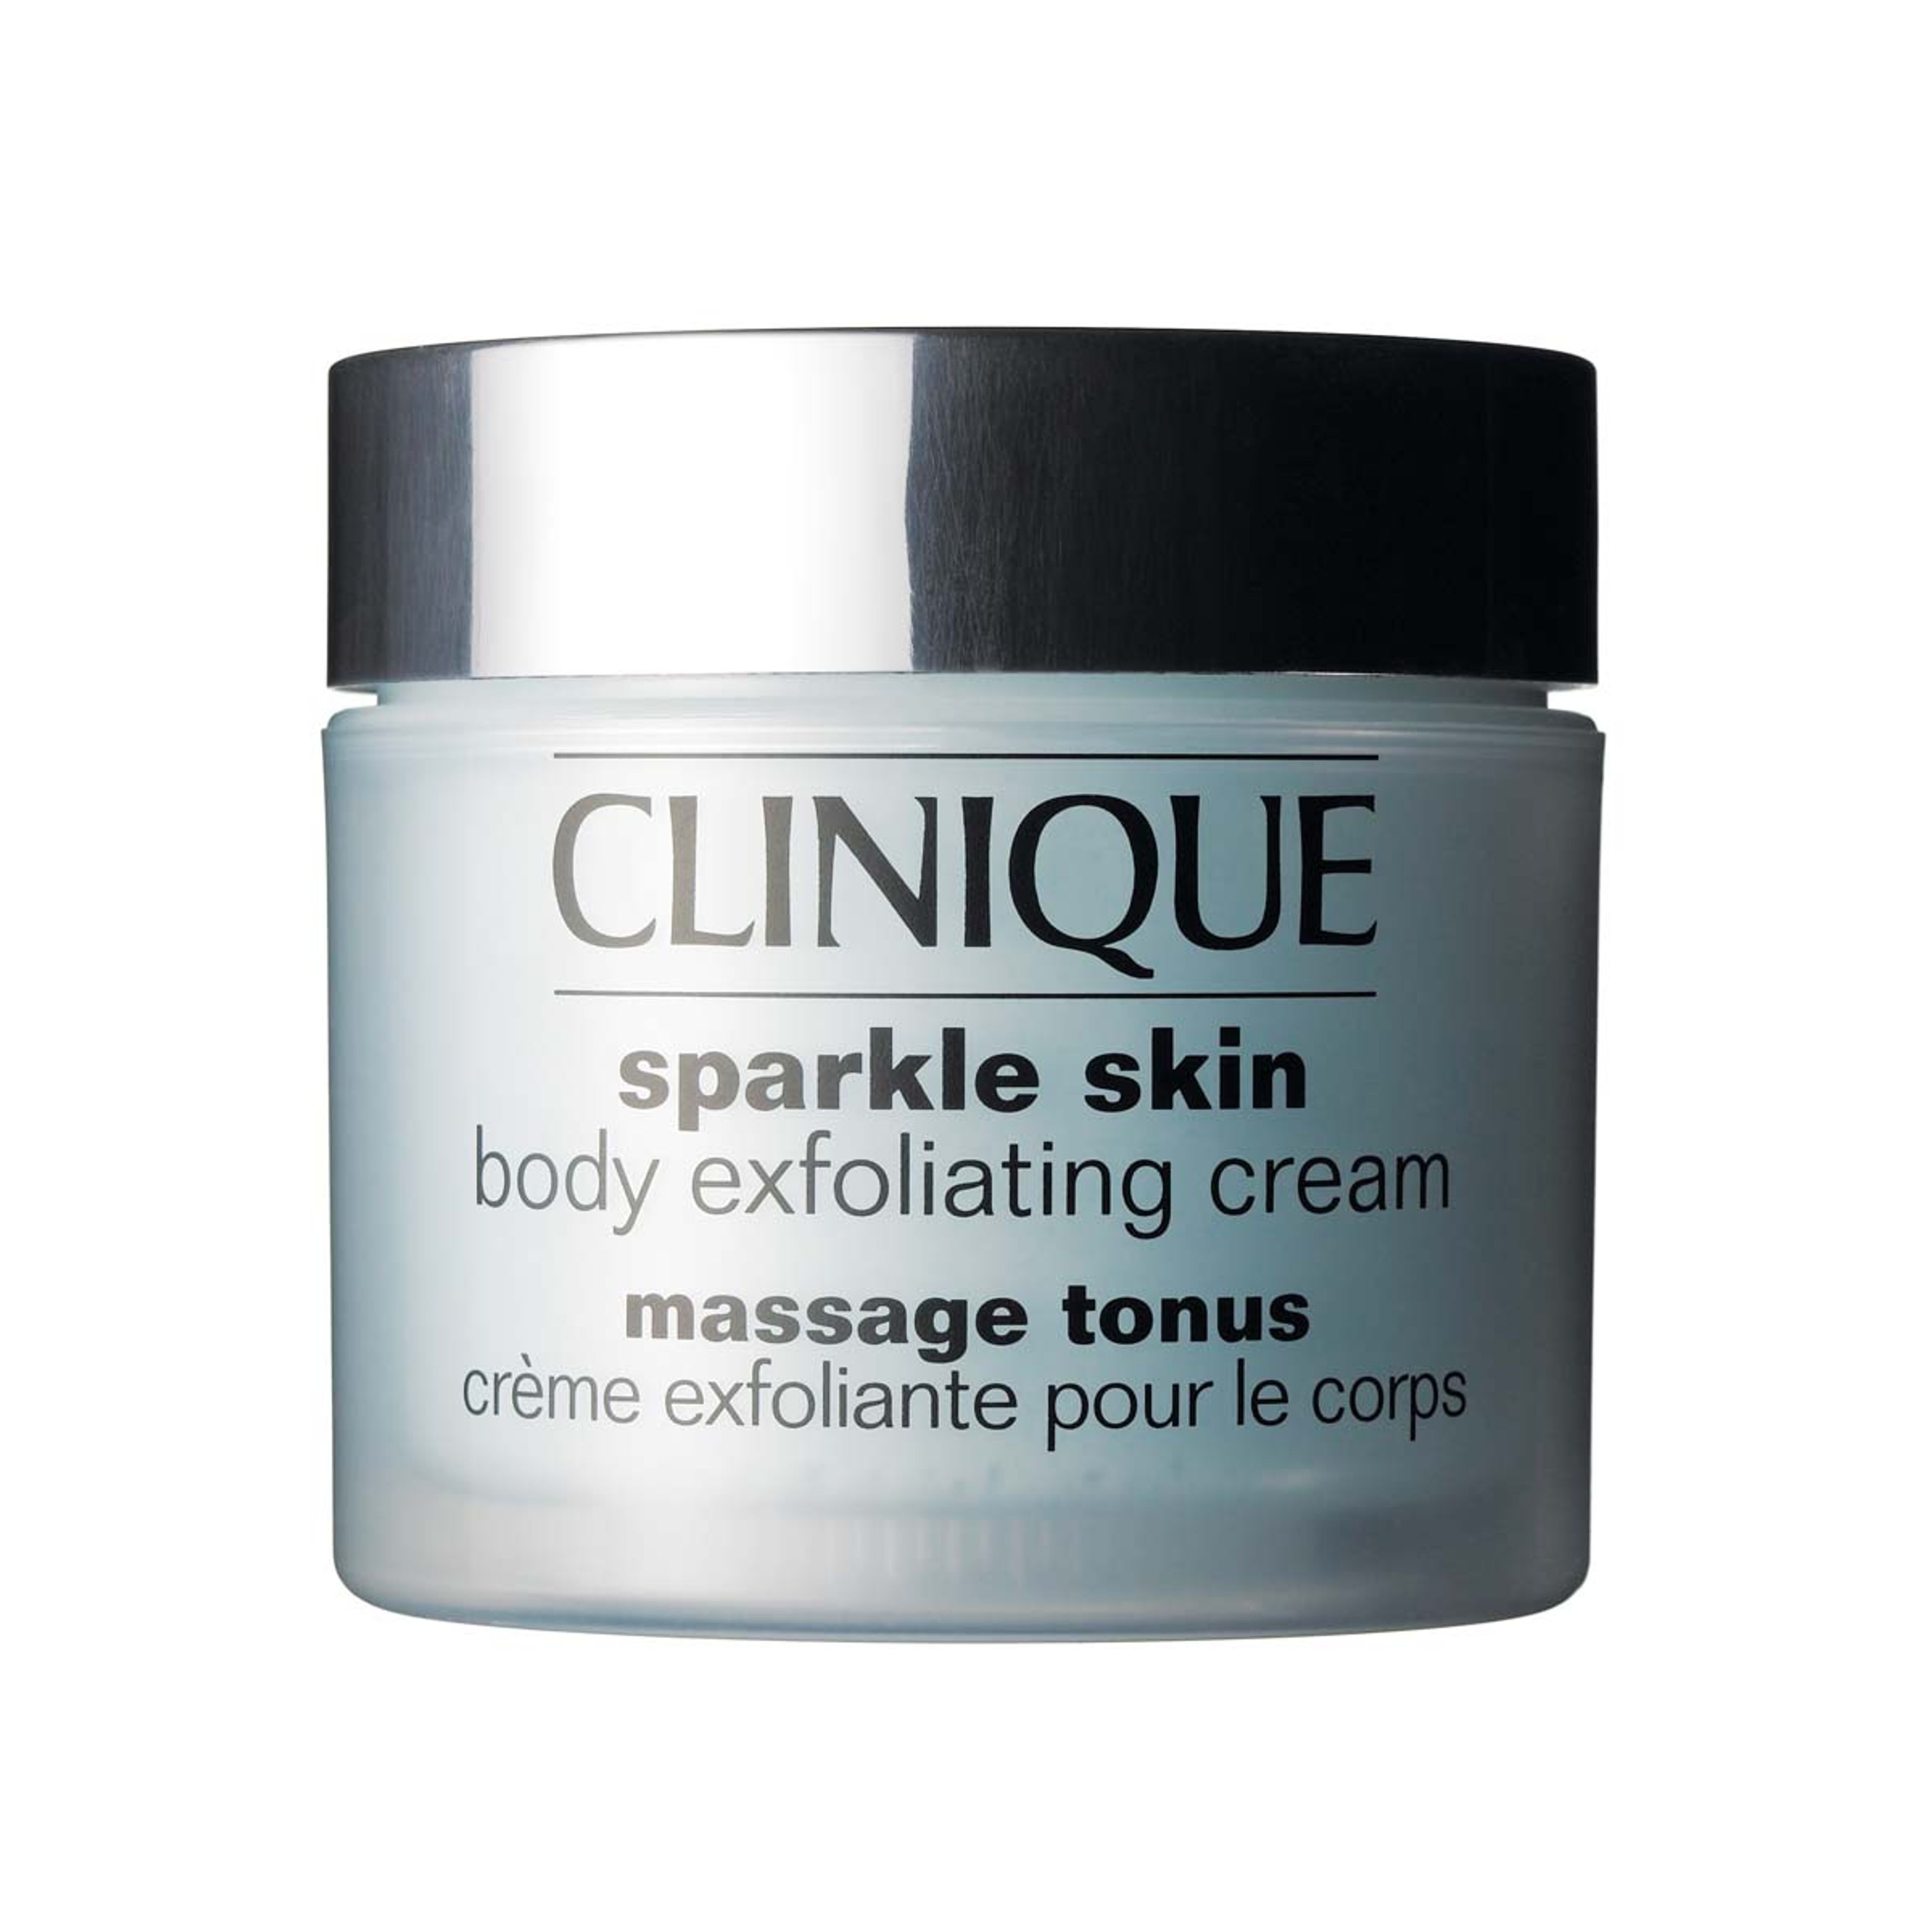 Clinique Sparkle Skin Body Exfoliating Cream 1